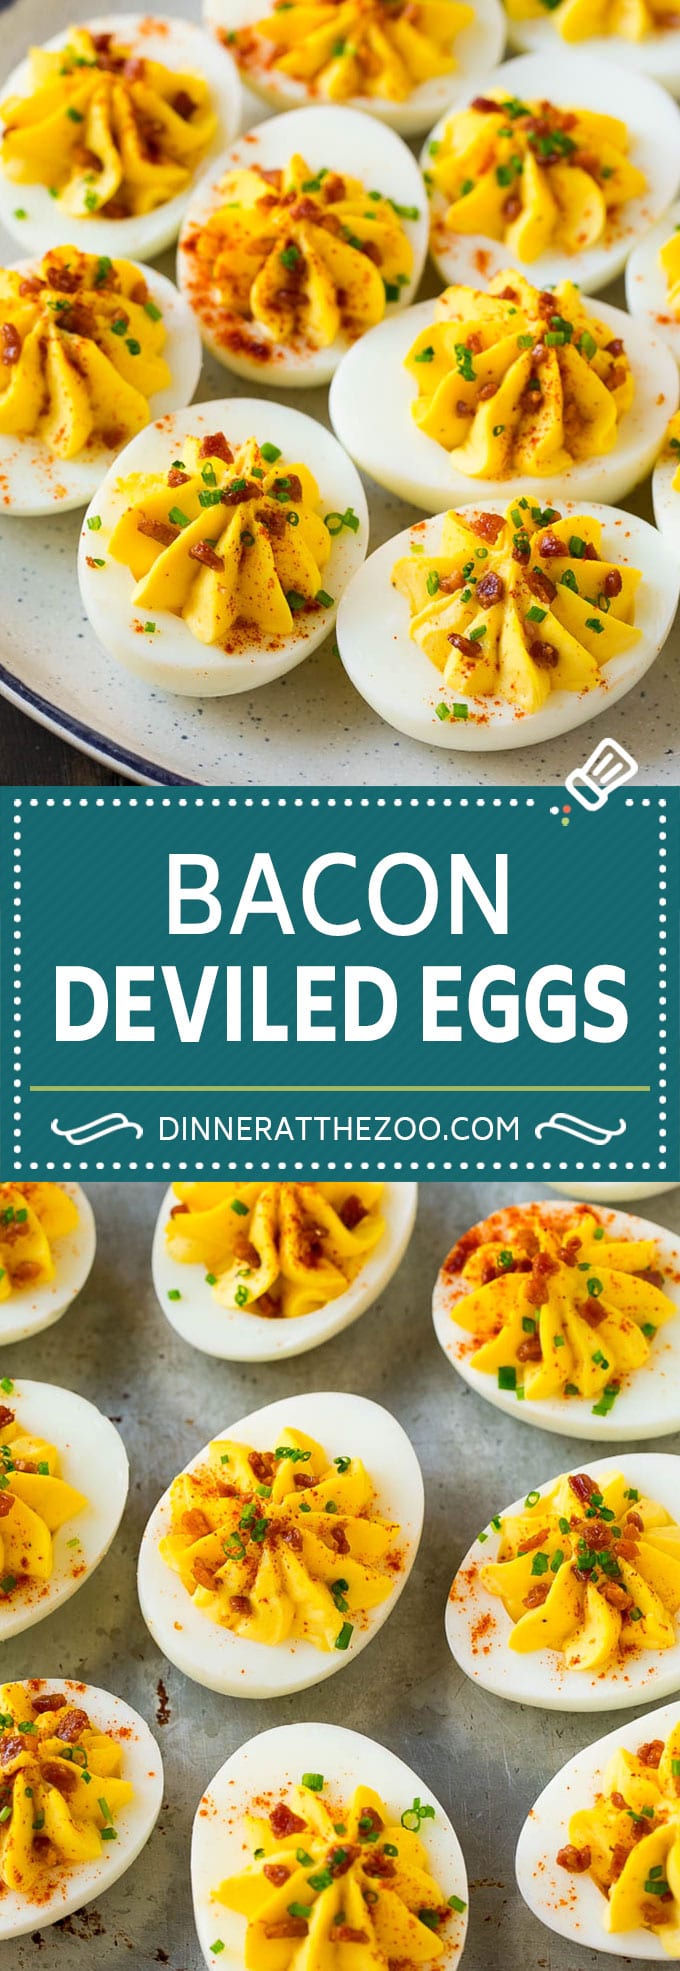 Bacon Deviled Eggs | Deviled Eggs Recipe #eggs #keto #lowcarb #bacon #appetizer #dinneratthezoo